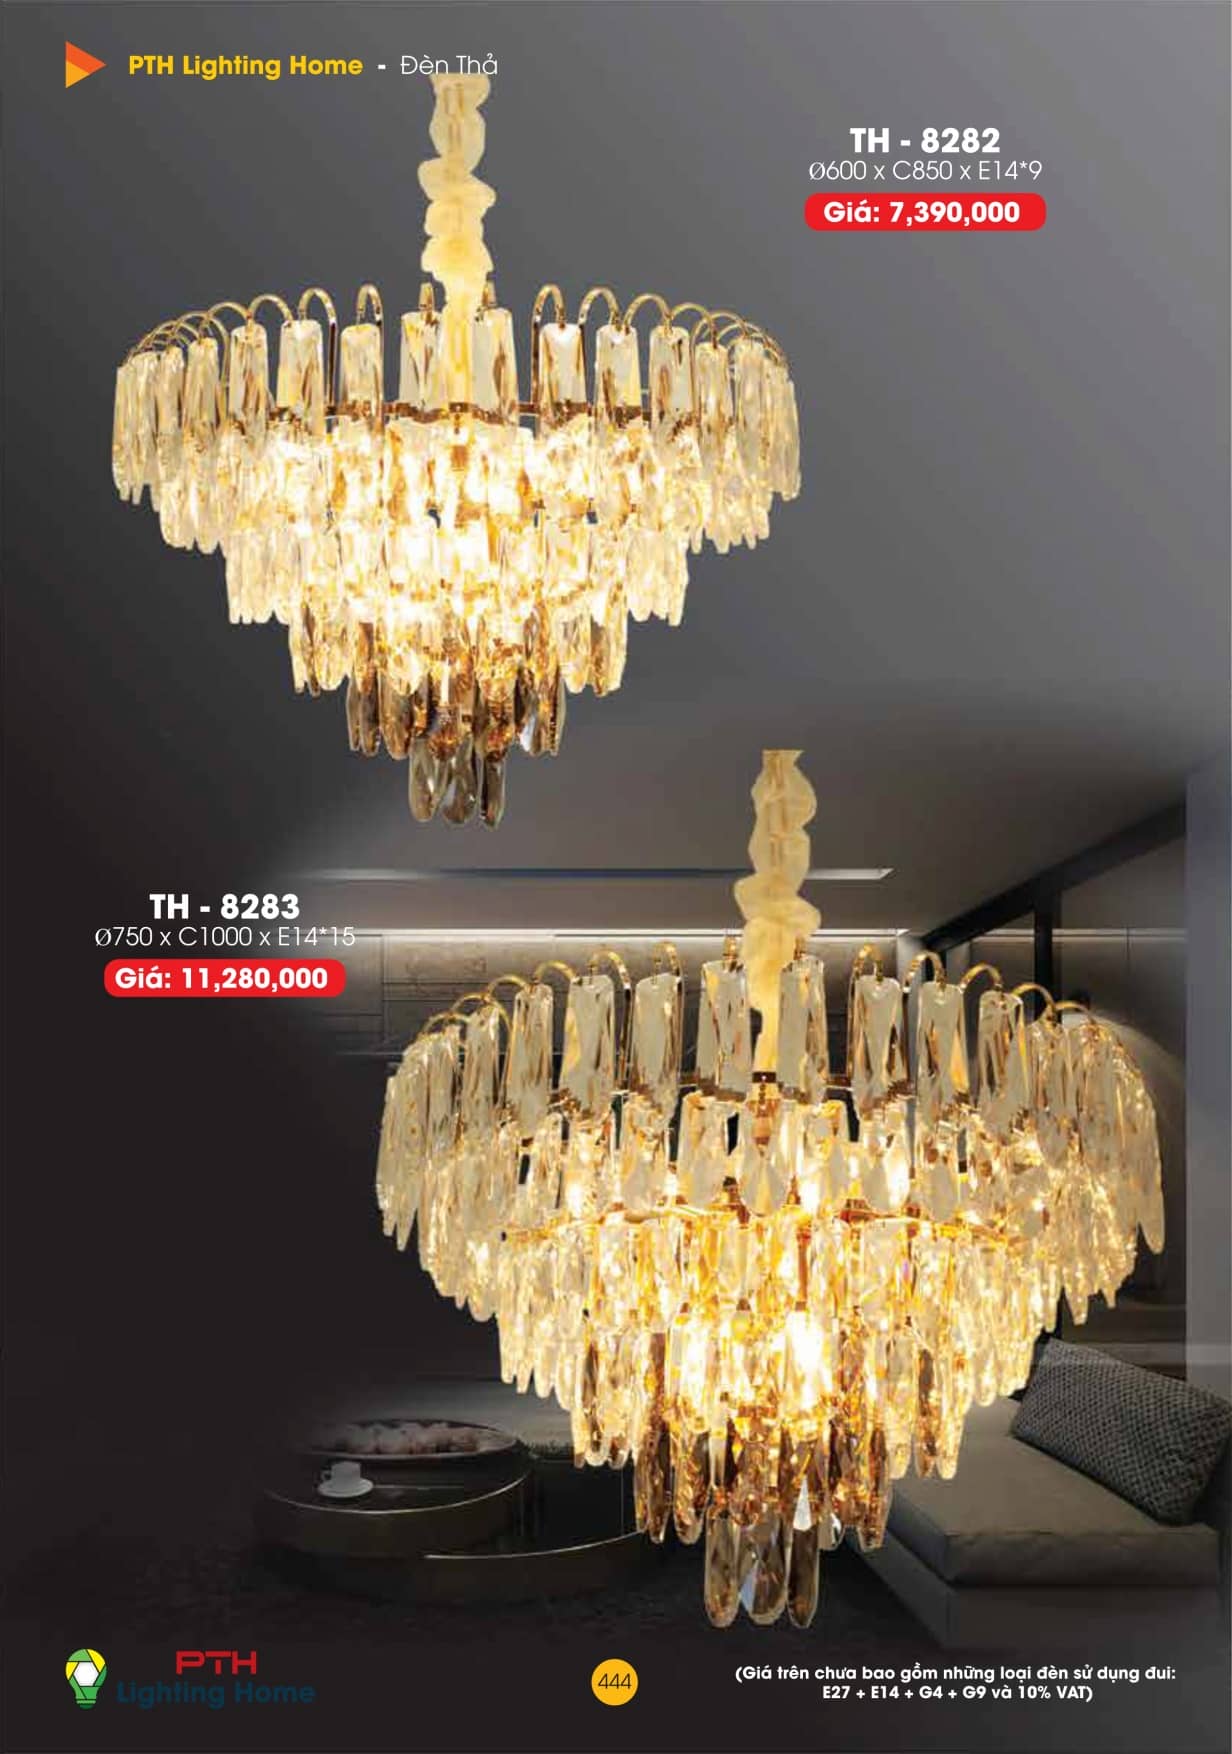 catalogue-bang-gia-den-led-trang-tri-pth-lighting-home-446